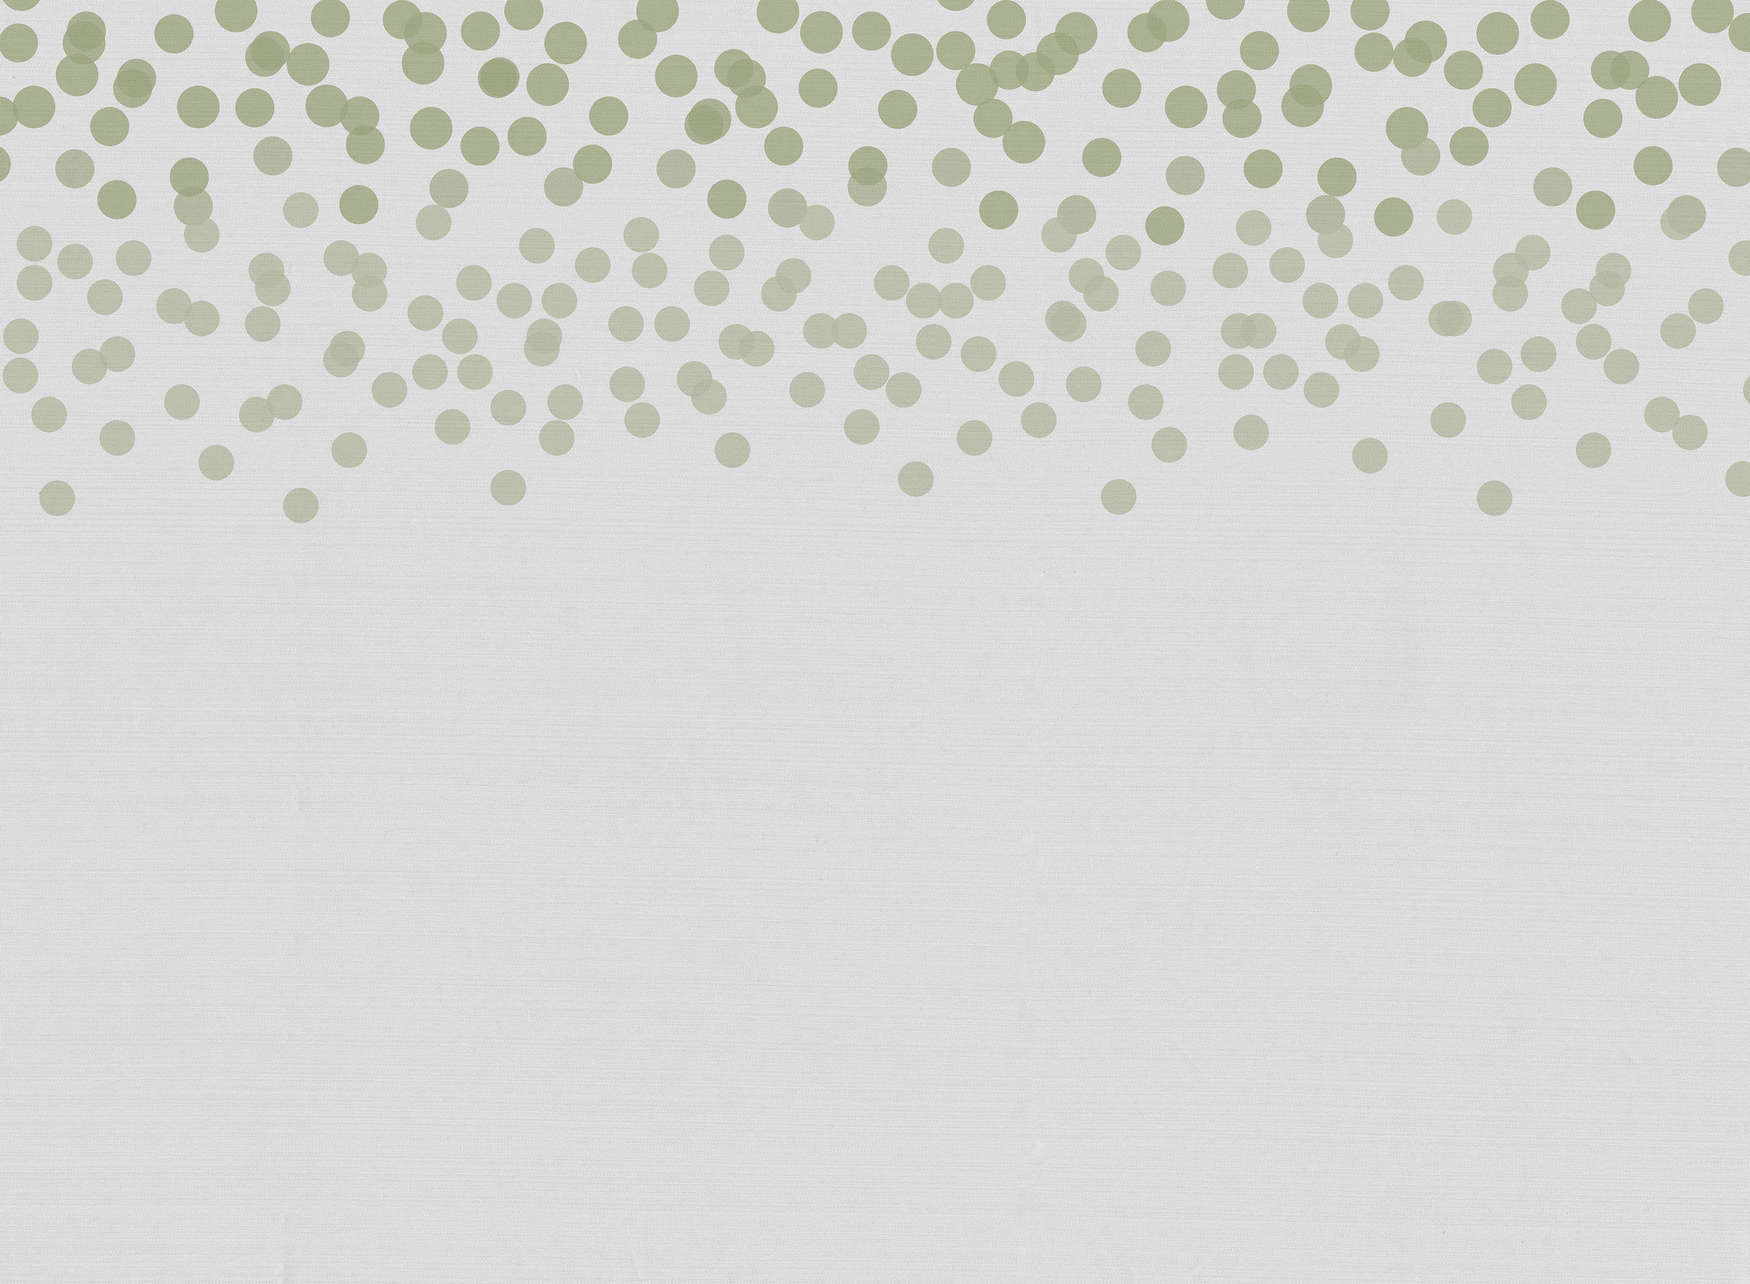             Photo wallpaper with discreet dot pattern - Green, Grey
        